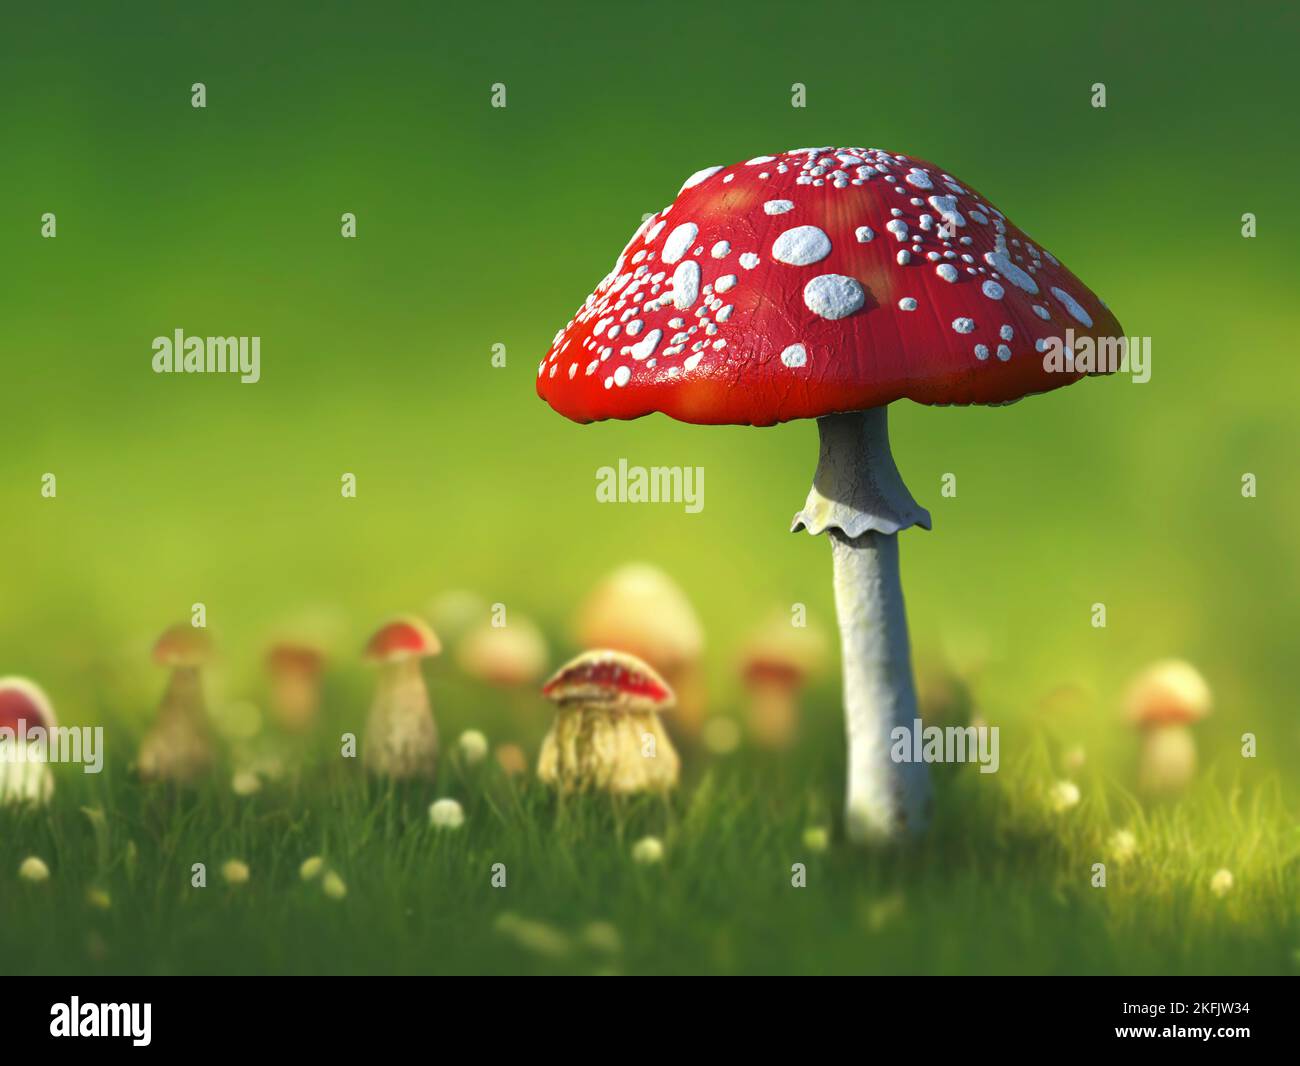 Fly agaric mushrooms, illustration Stock Photo